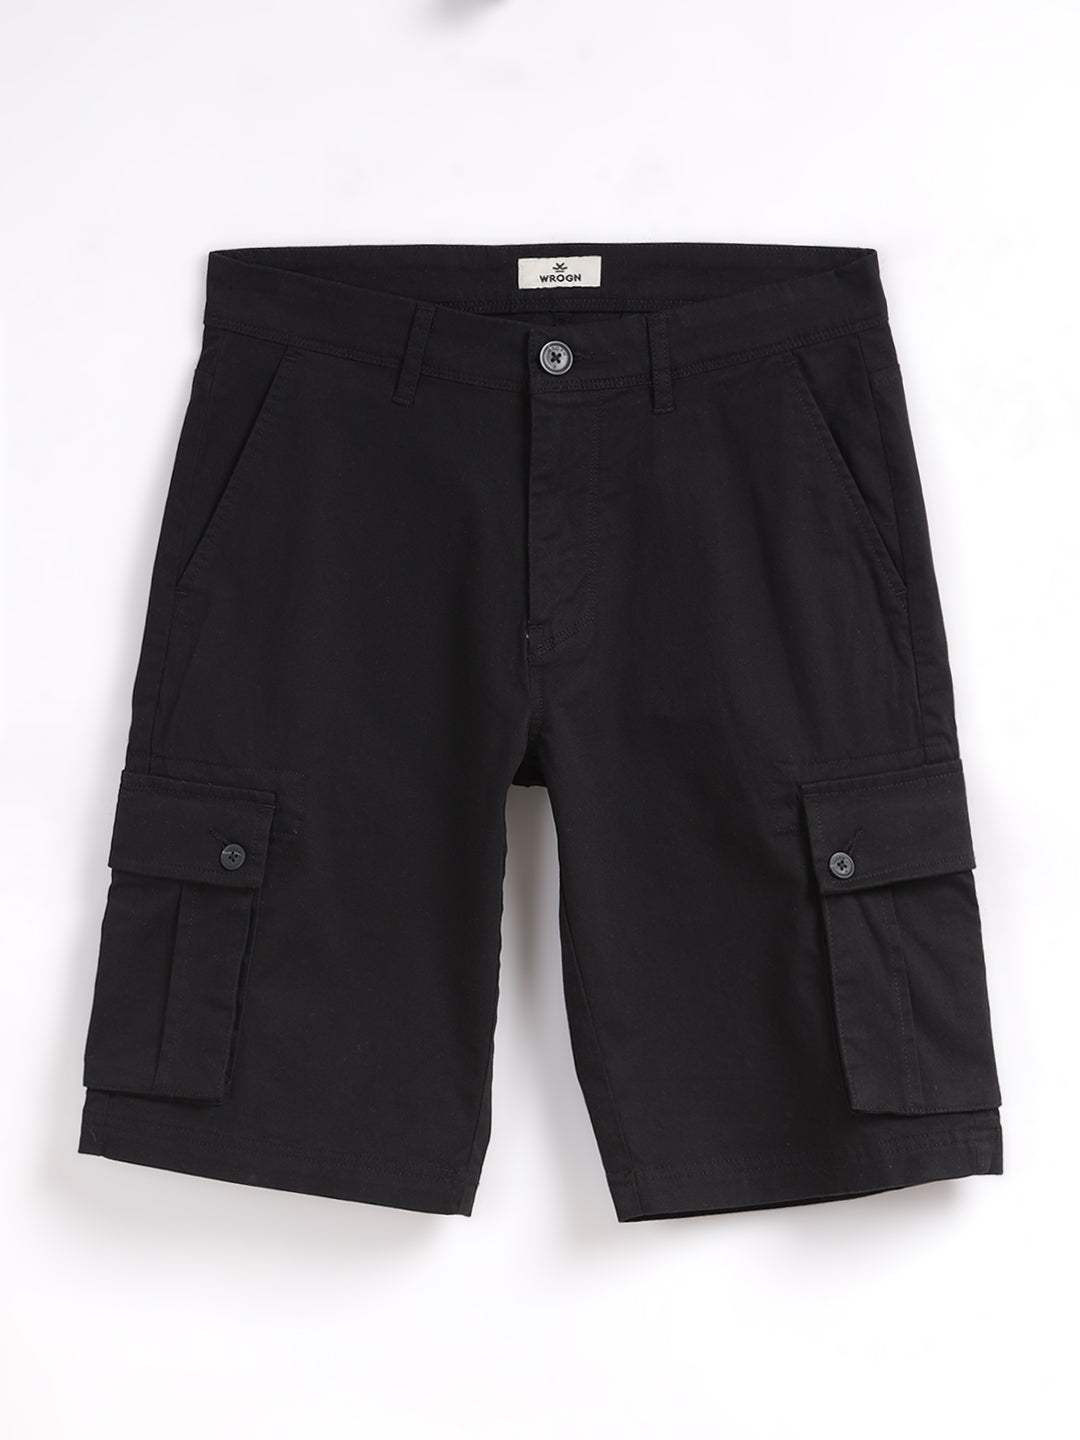 Solid Black Cargo Shorts